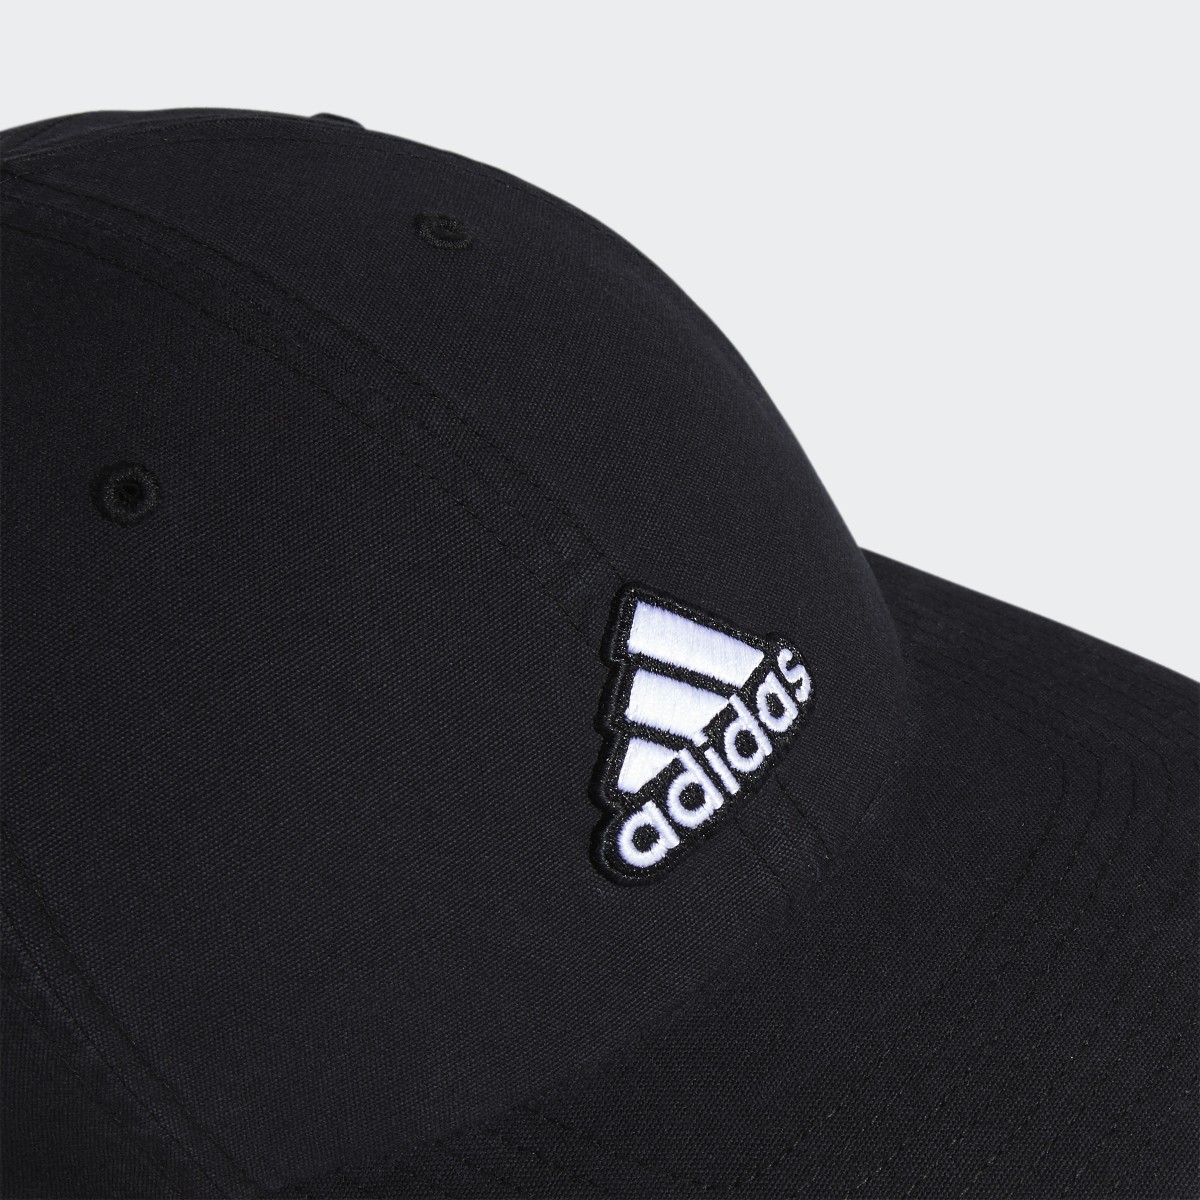 Adidas Ultimate Hat. 5